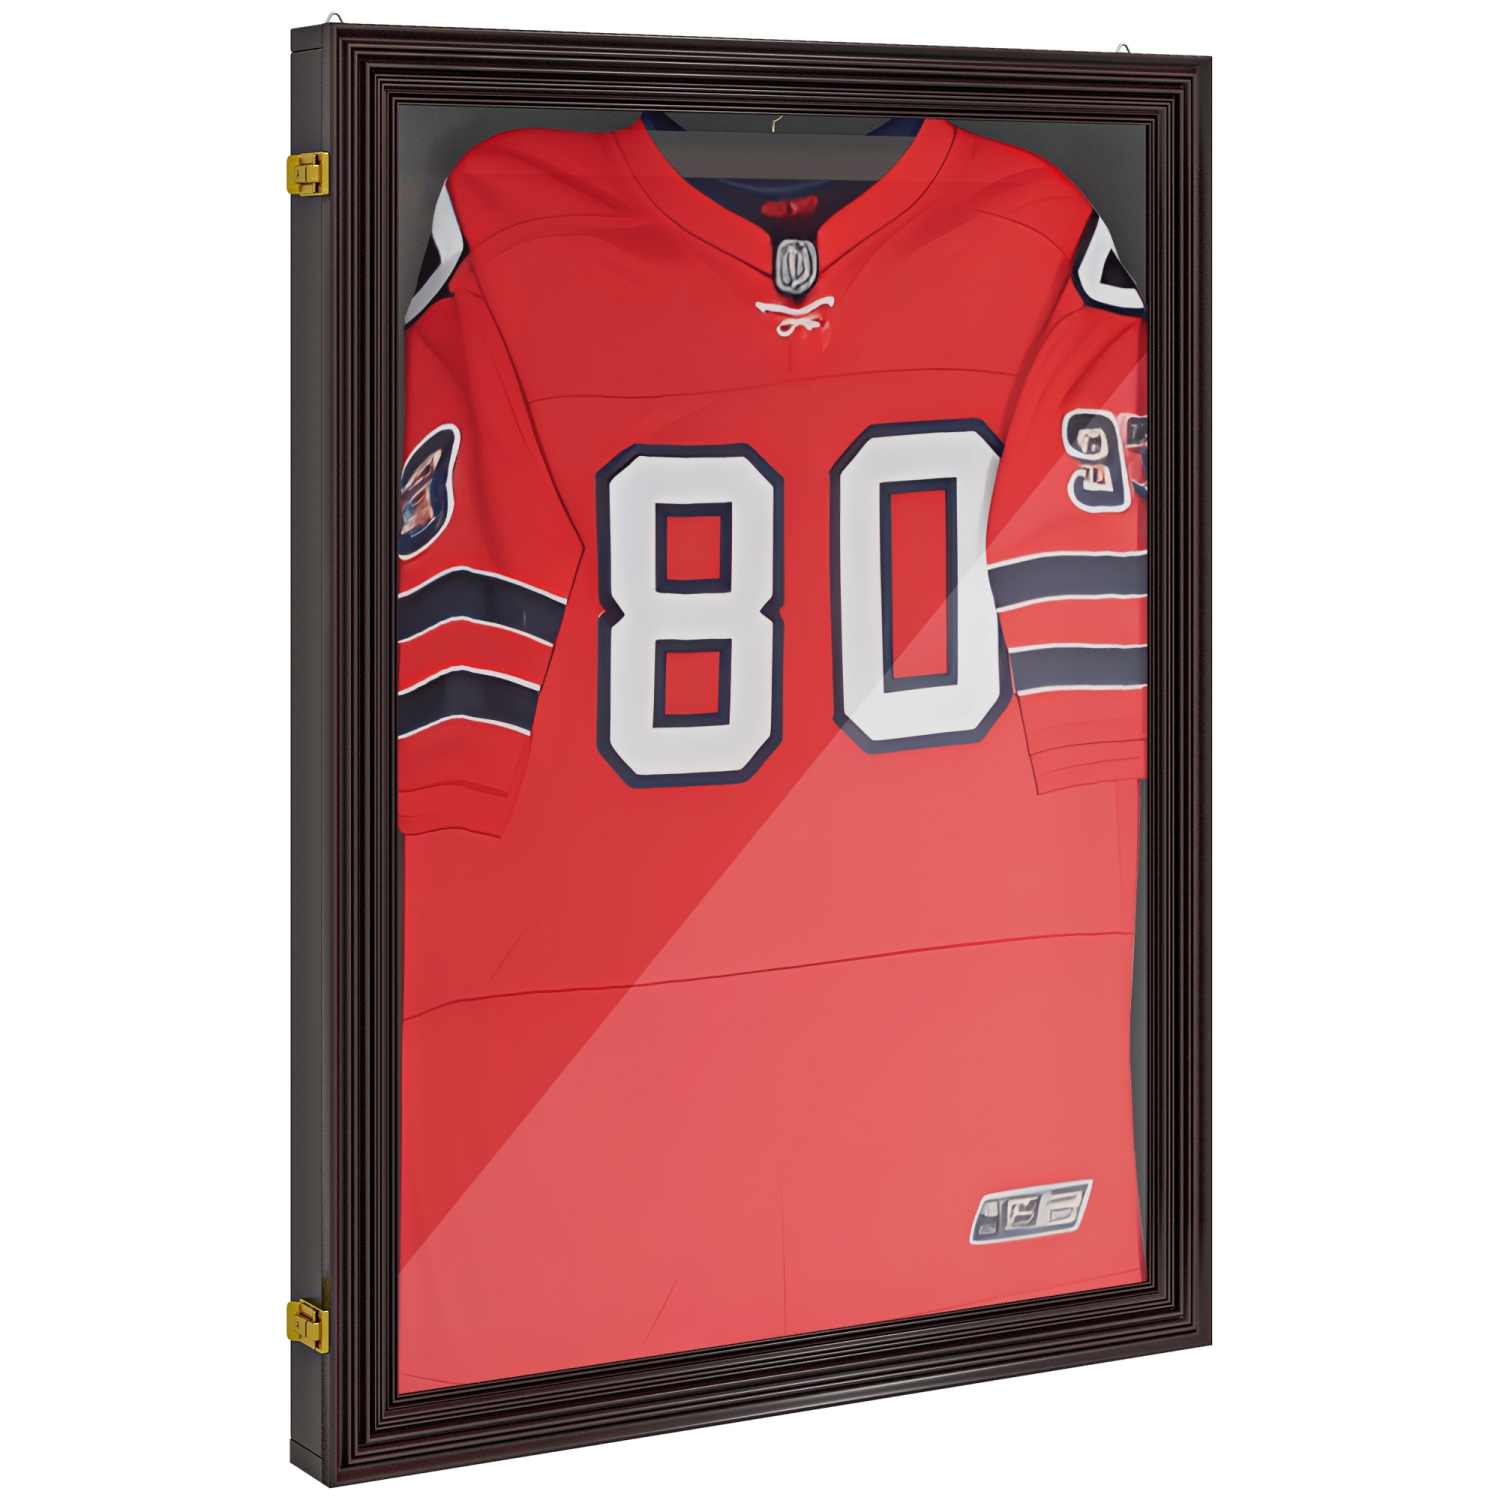 HOMCOM Jersey Display Frame Case, Acrylic Sports Shirt Shadow Box for Basketball Football Baseball, 23.5" x 31.5", Brown